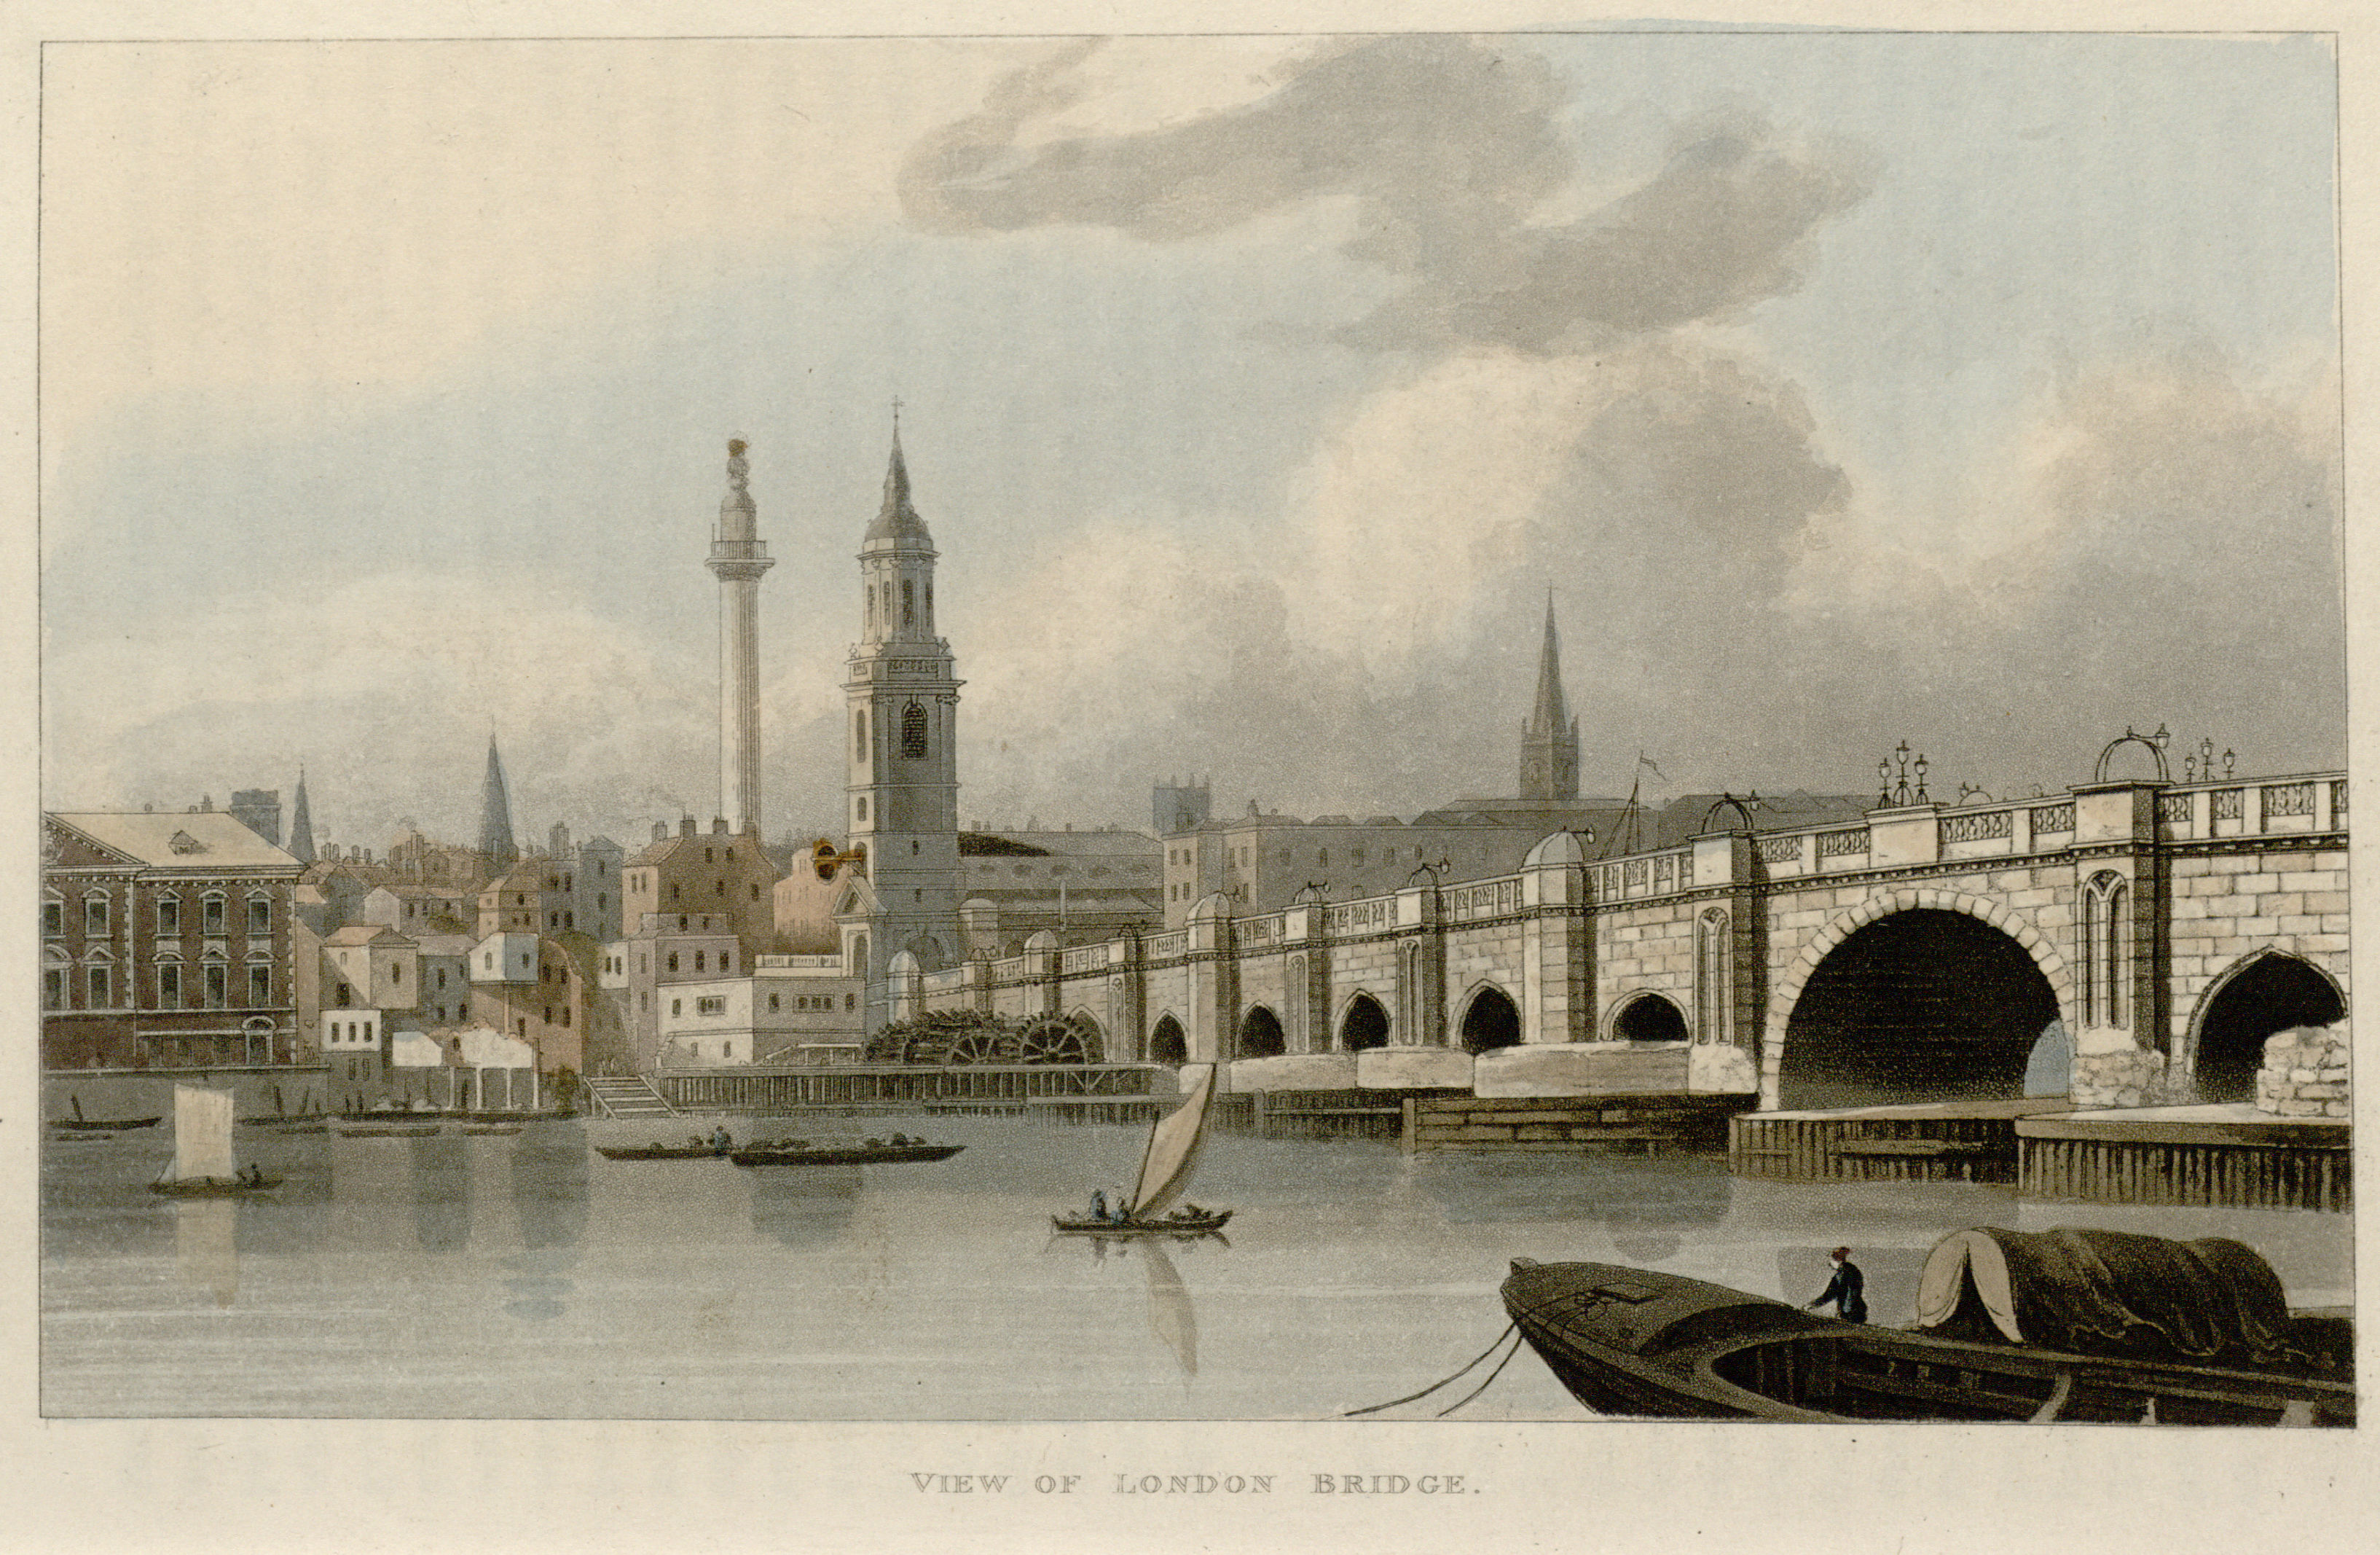 71 - Papworth - View of London Bridge